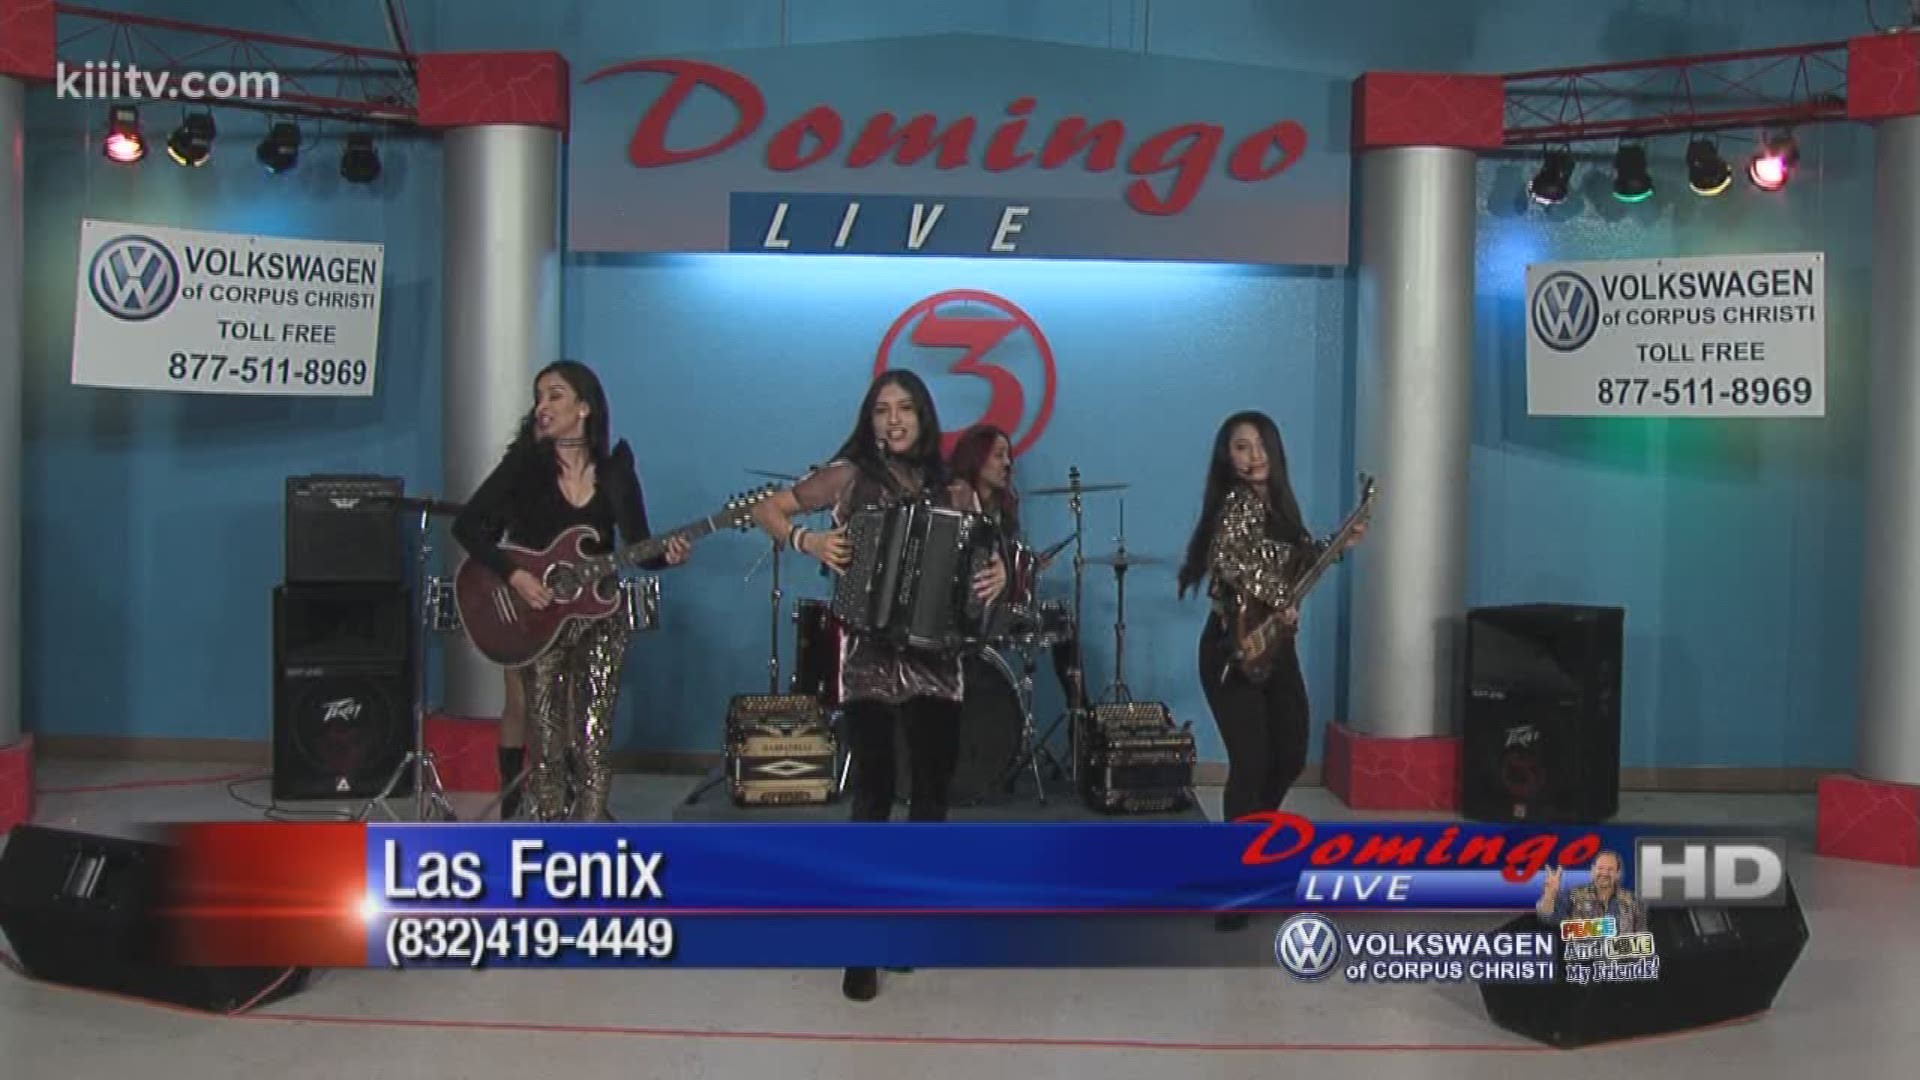 Las Fenix Performing "Cosquillitas" on Domingo Live!